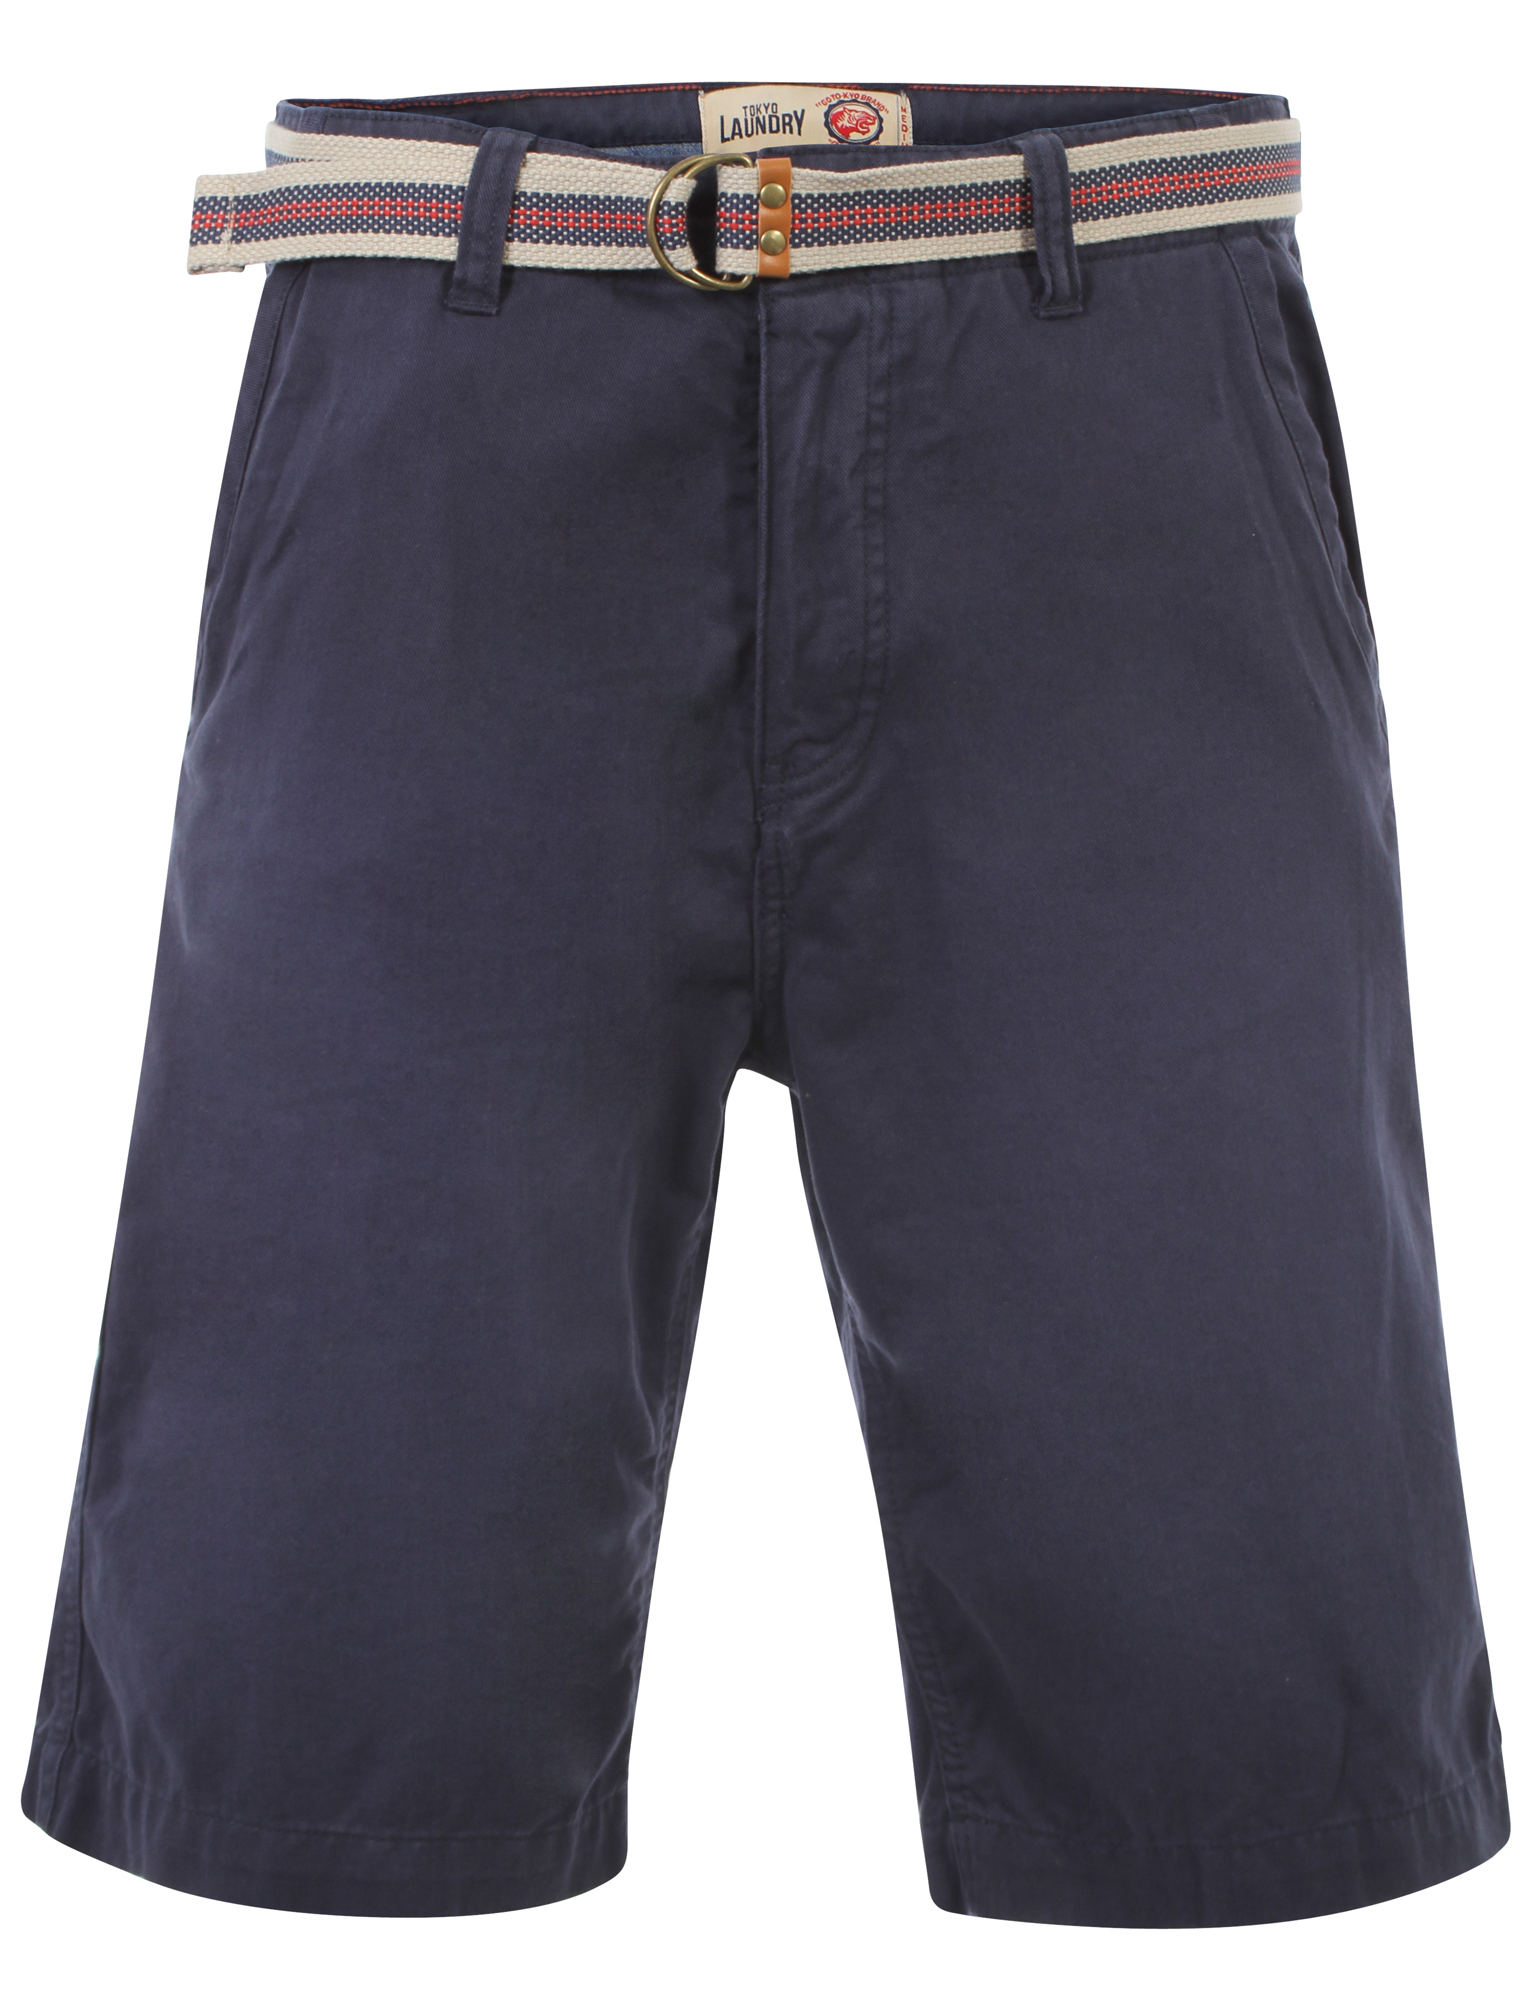 tokyo laundry armel shorts dk blue 1g5610